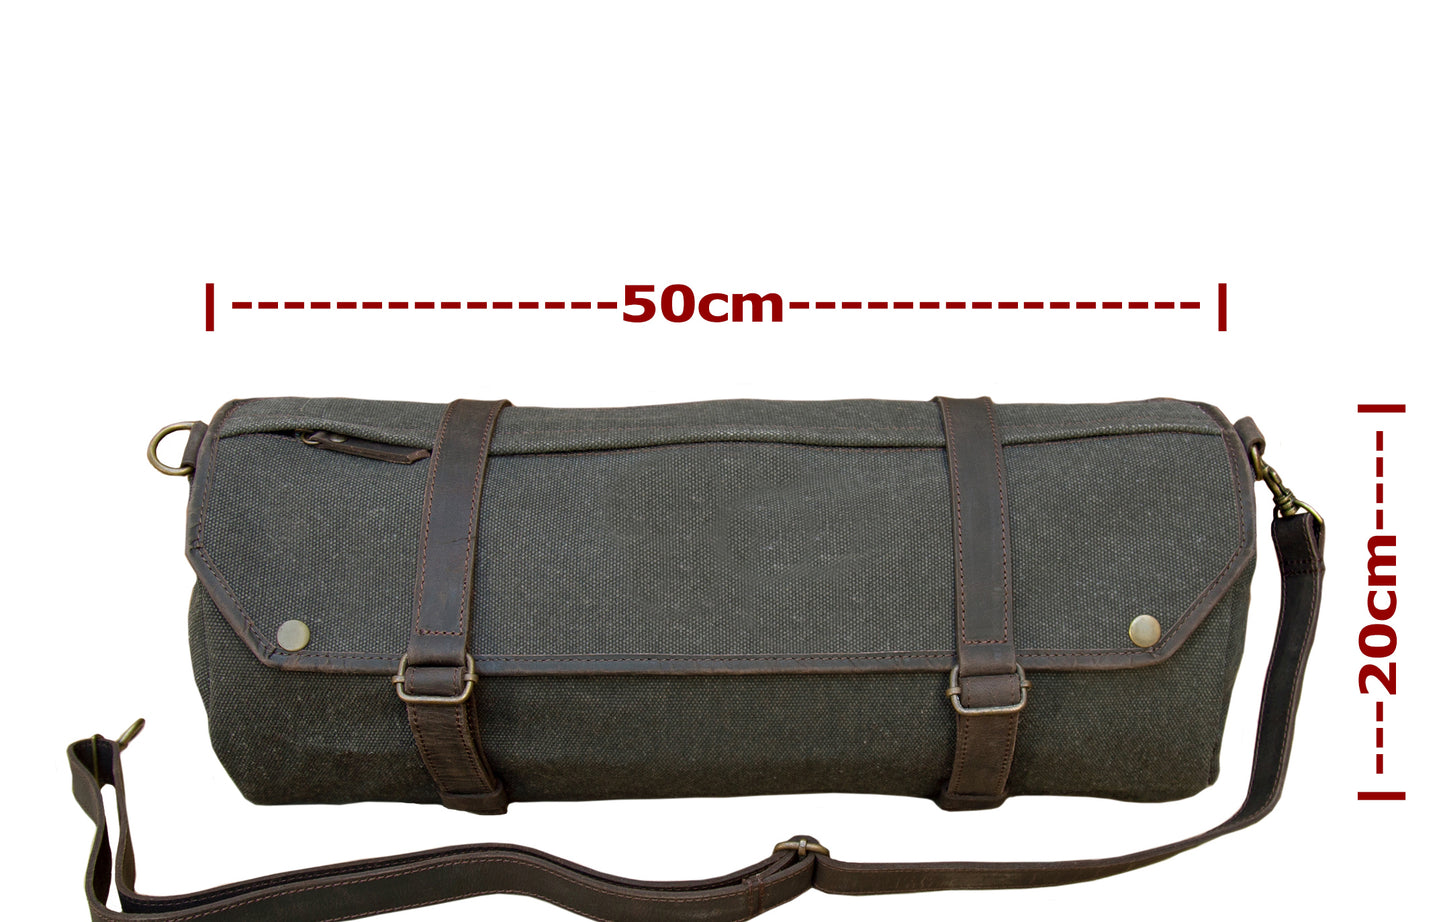 Robust waterproof roller bag, shoulder bag with a carrier strap suitable for the bike